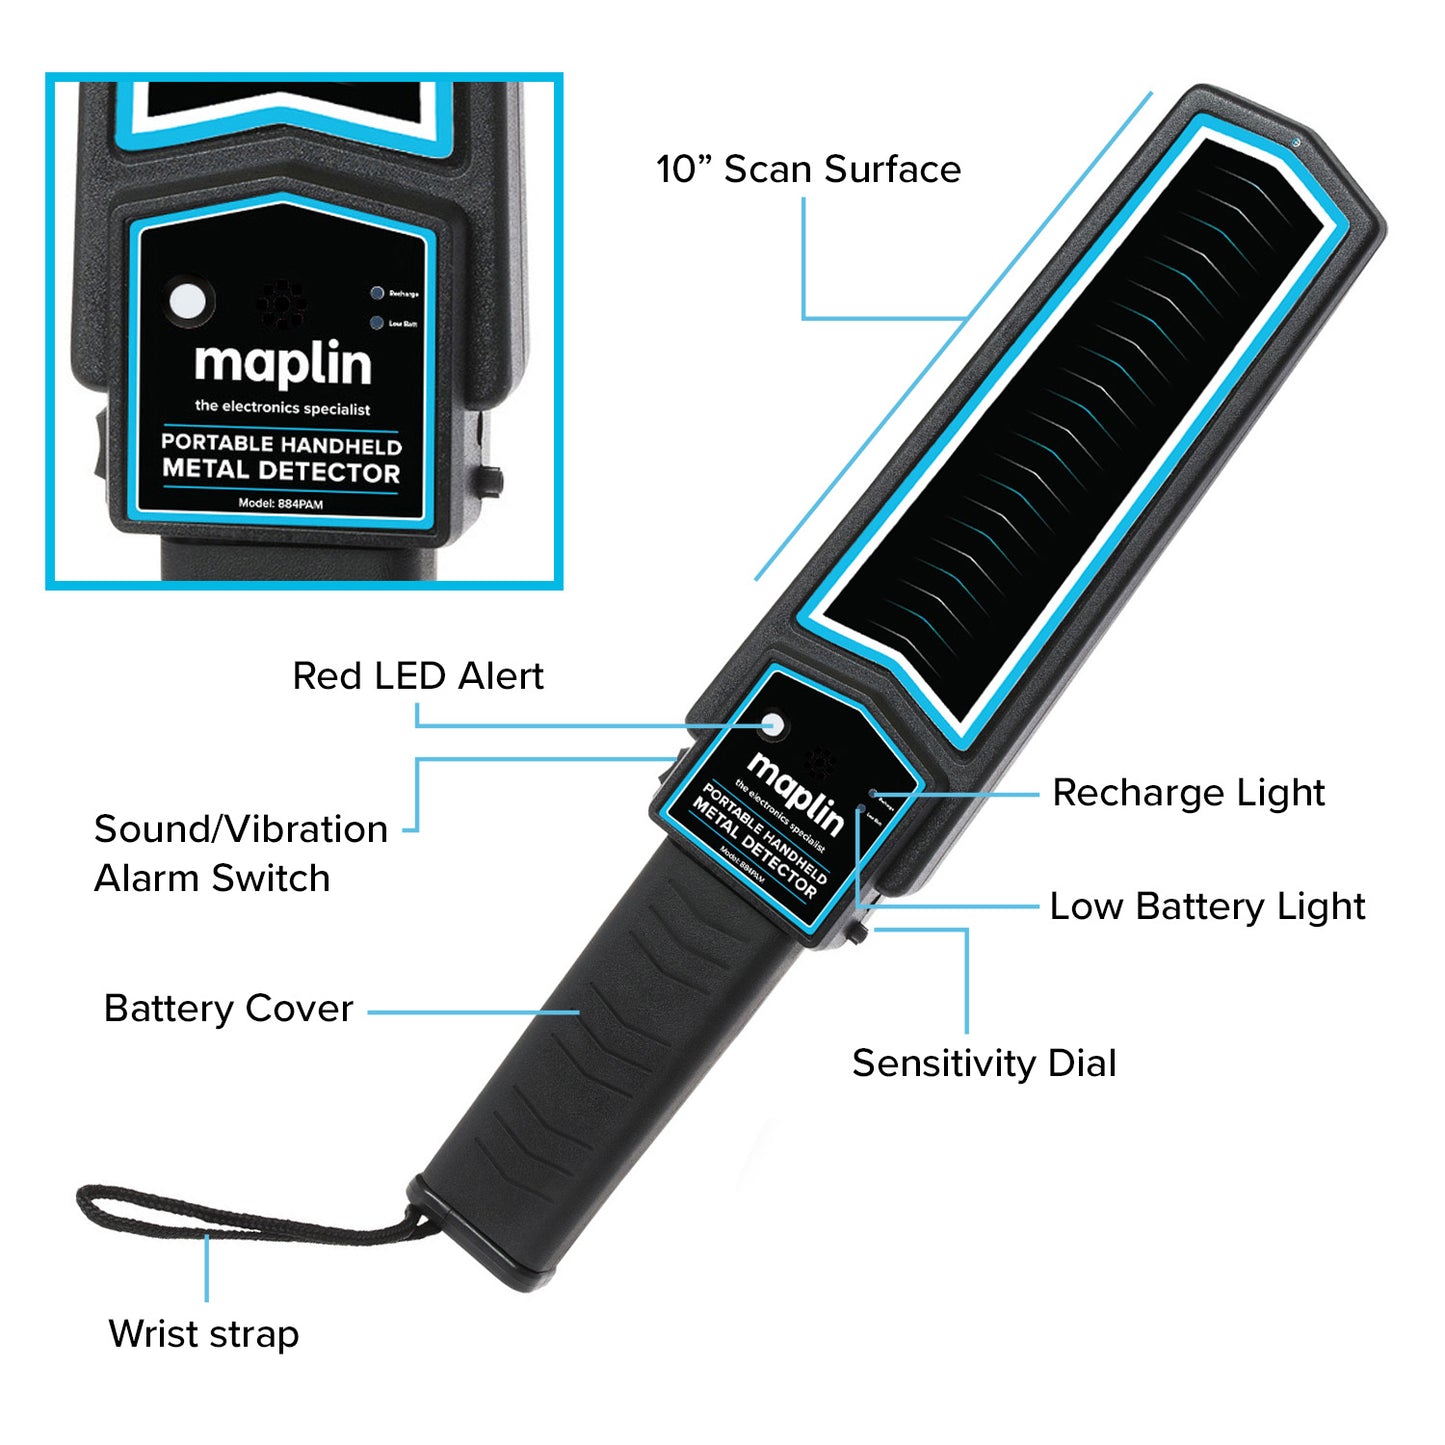 Maplin Handheld 10" Metal Detector Body Scanner with Beep/Vibration Alerts & LED Light